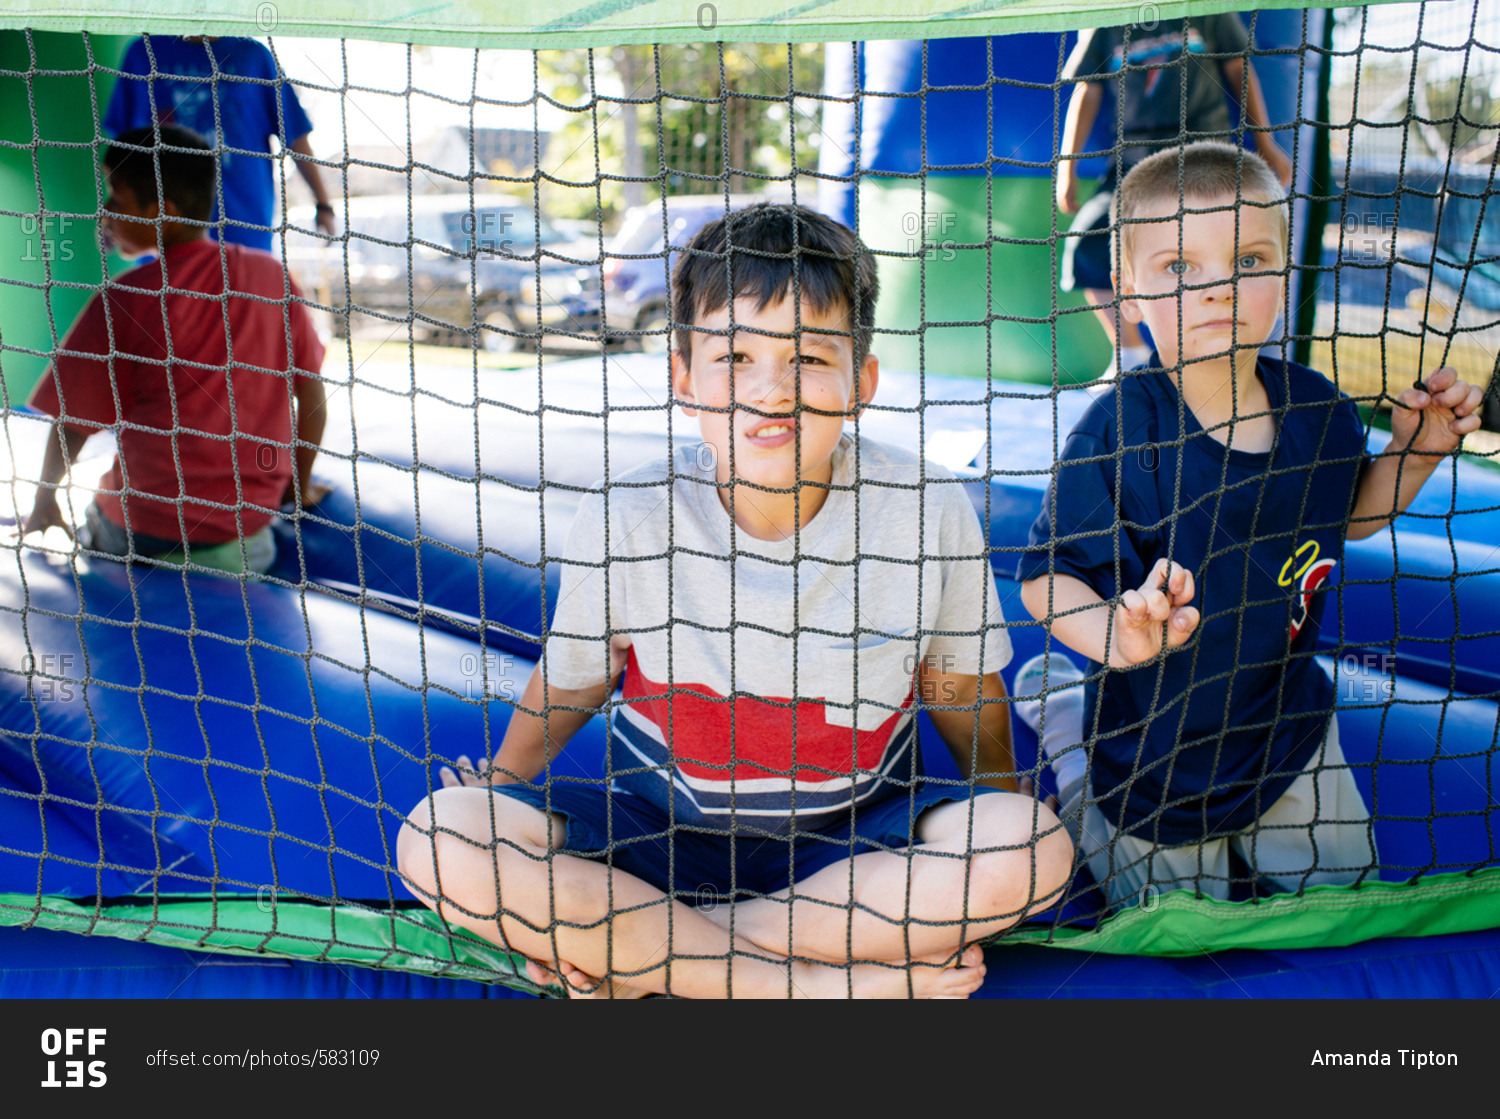 Kids looking through bounce house net